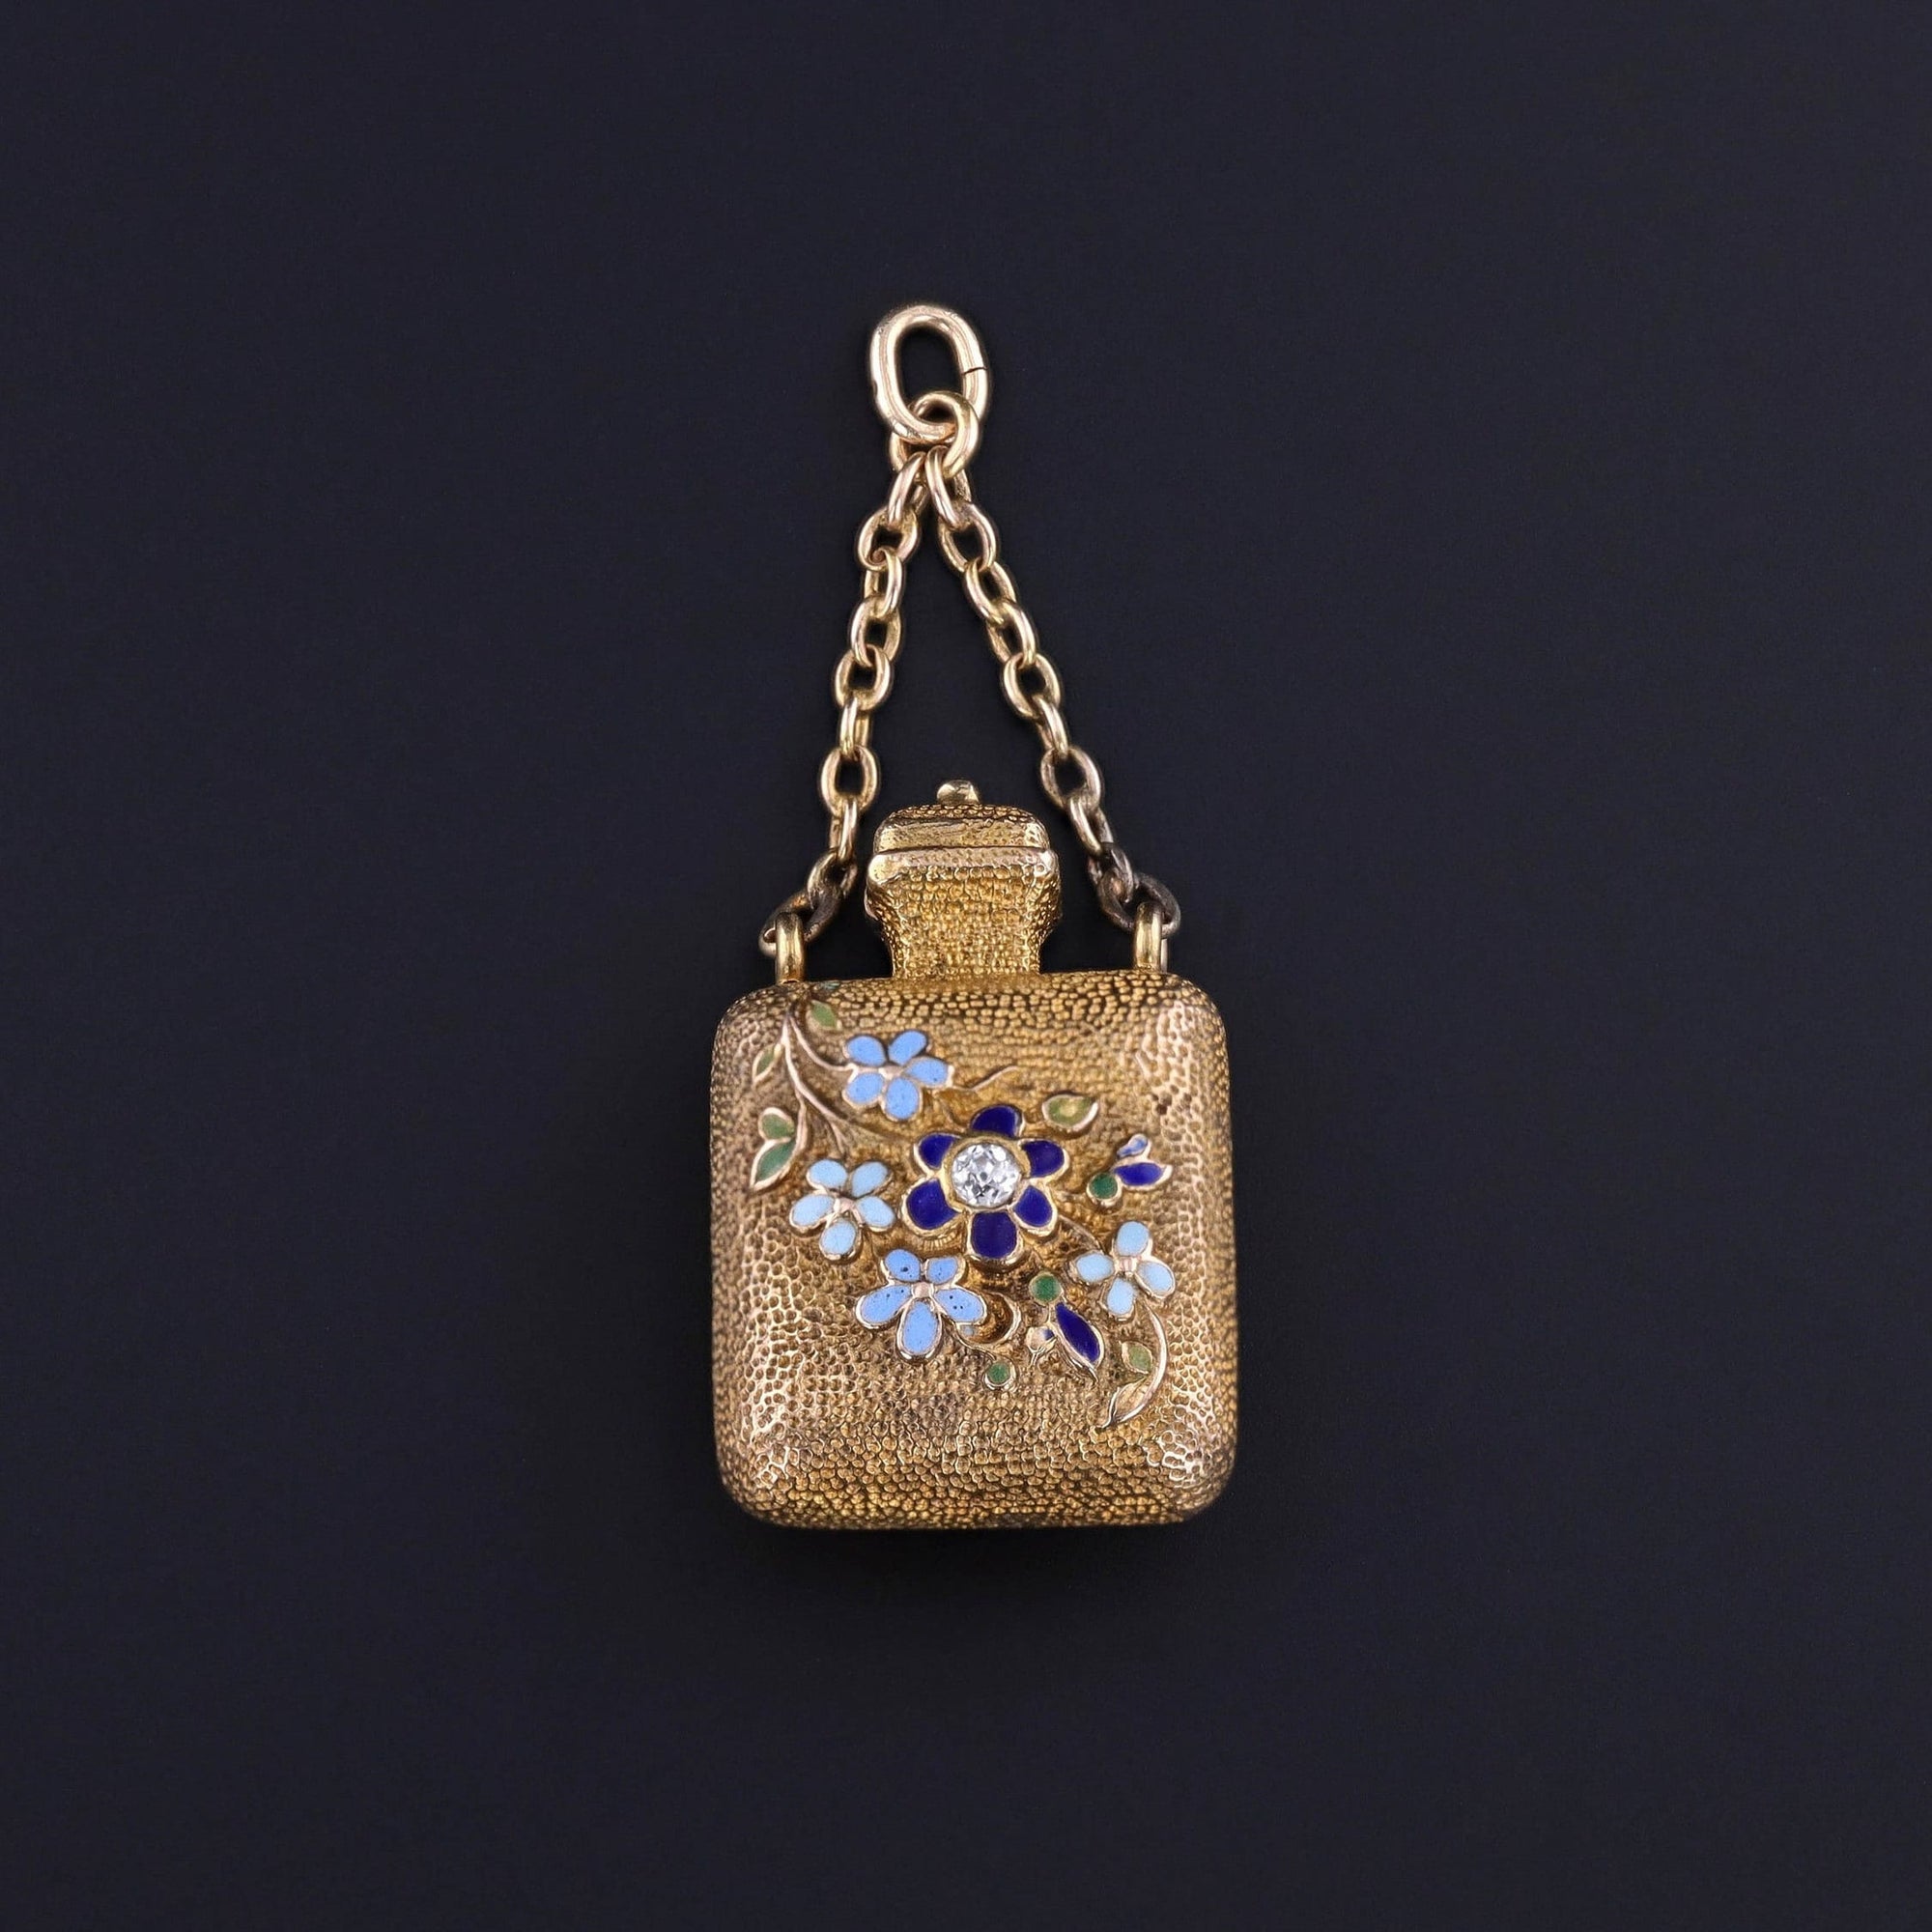 Antique Perfume Bottle Charm of 18k Gold